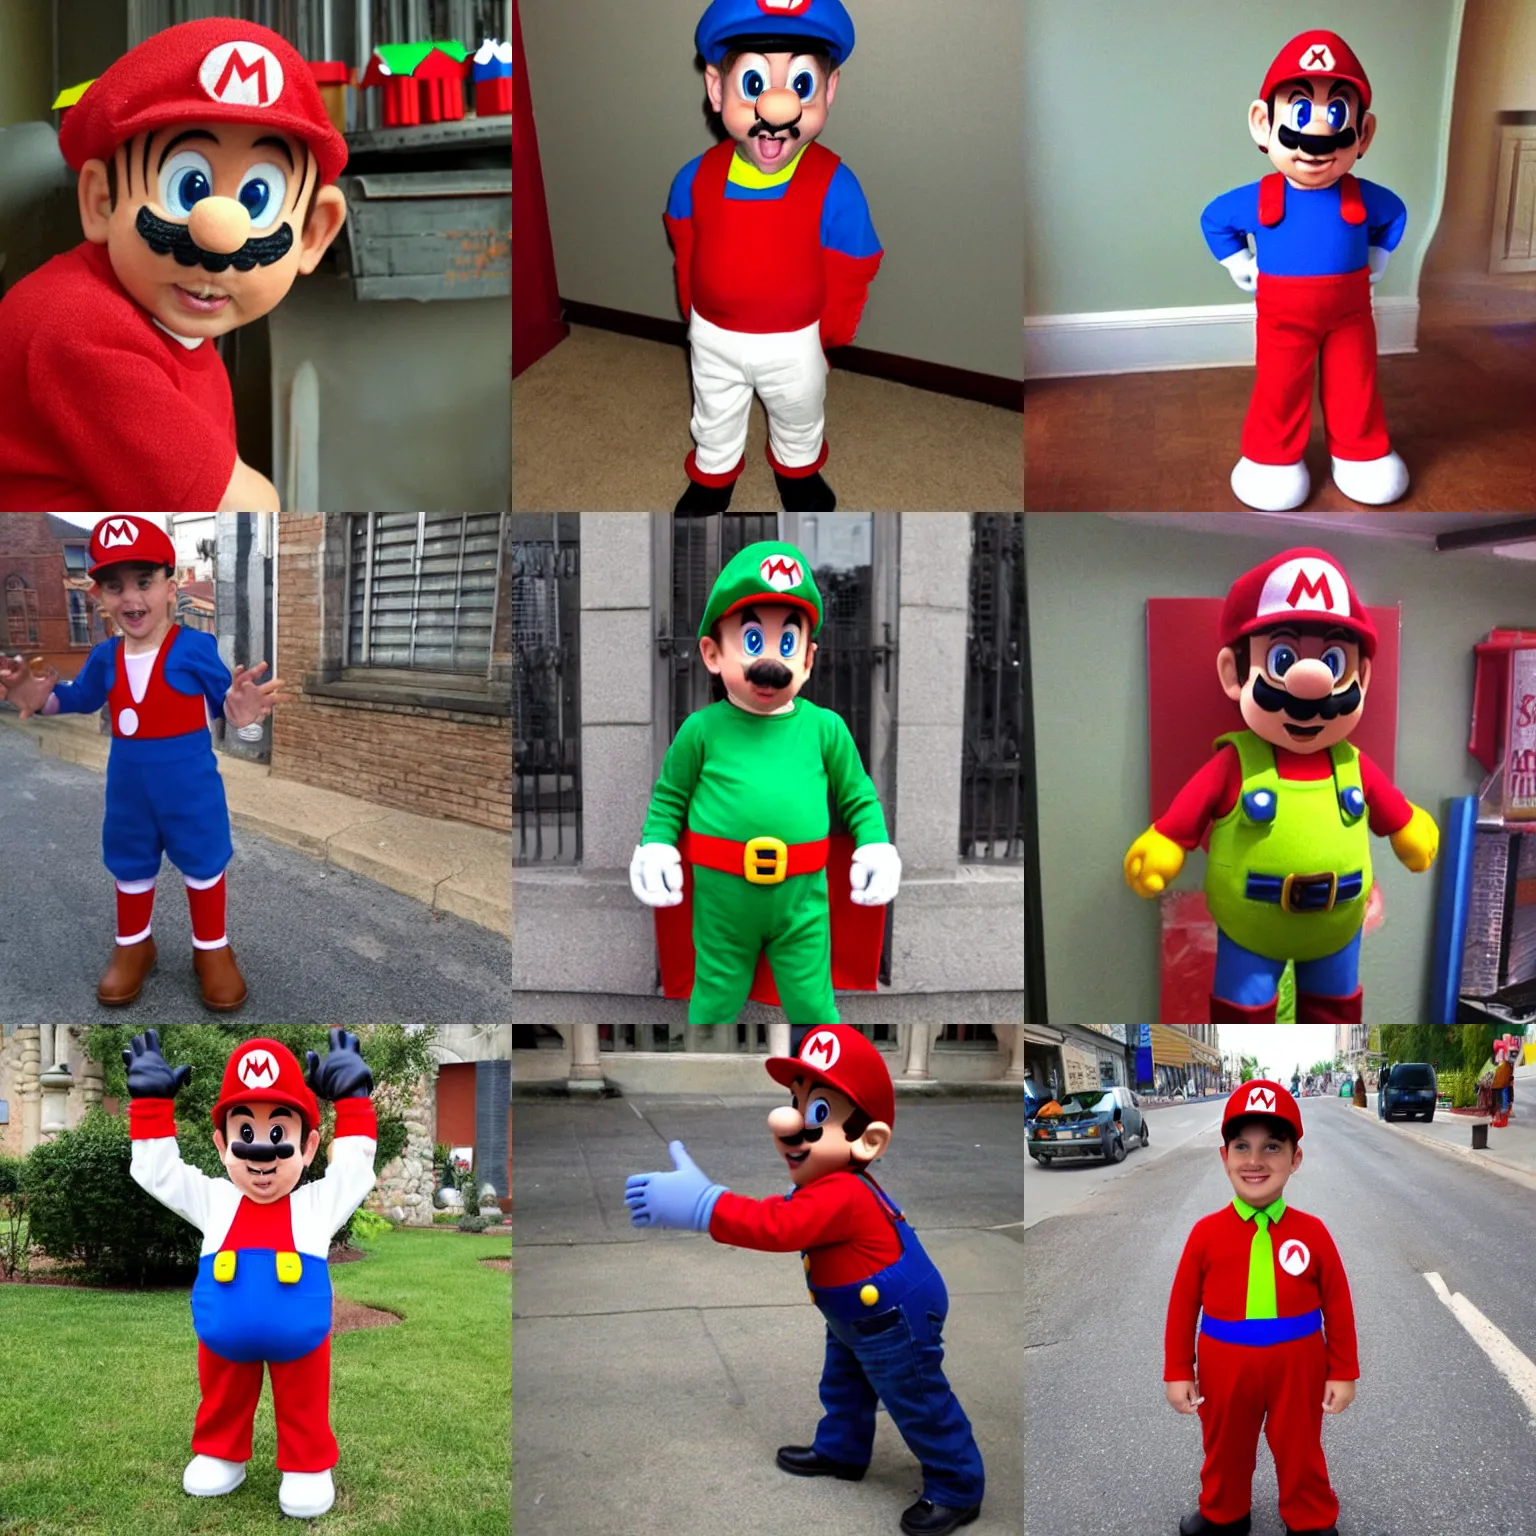 Prompt: Michael de Santa dressed like Super Mario